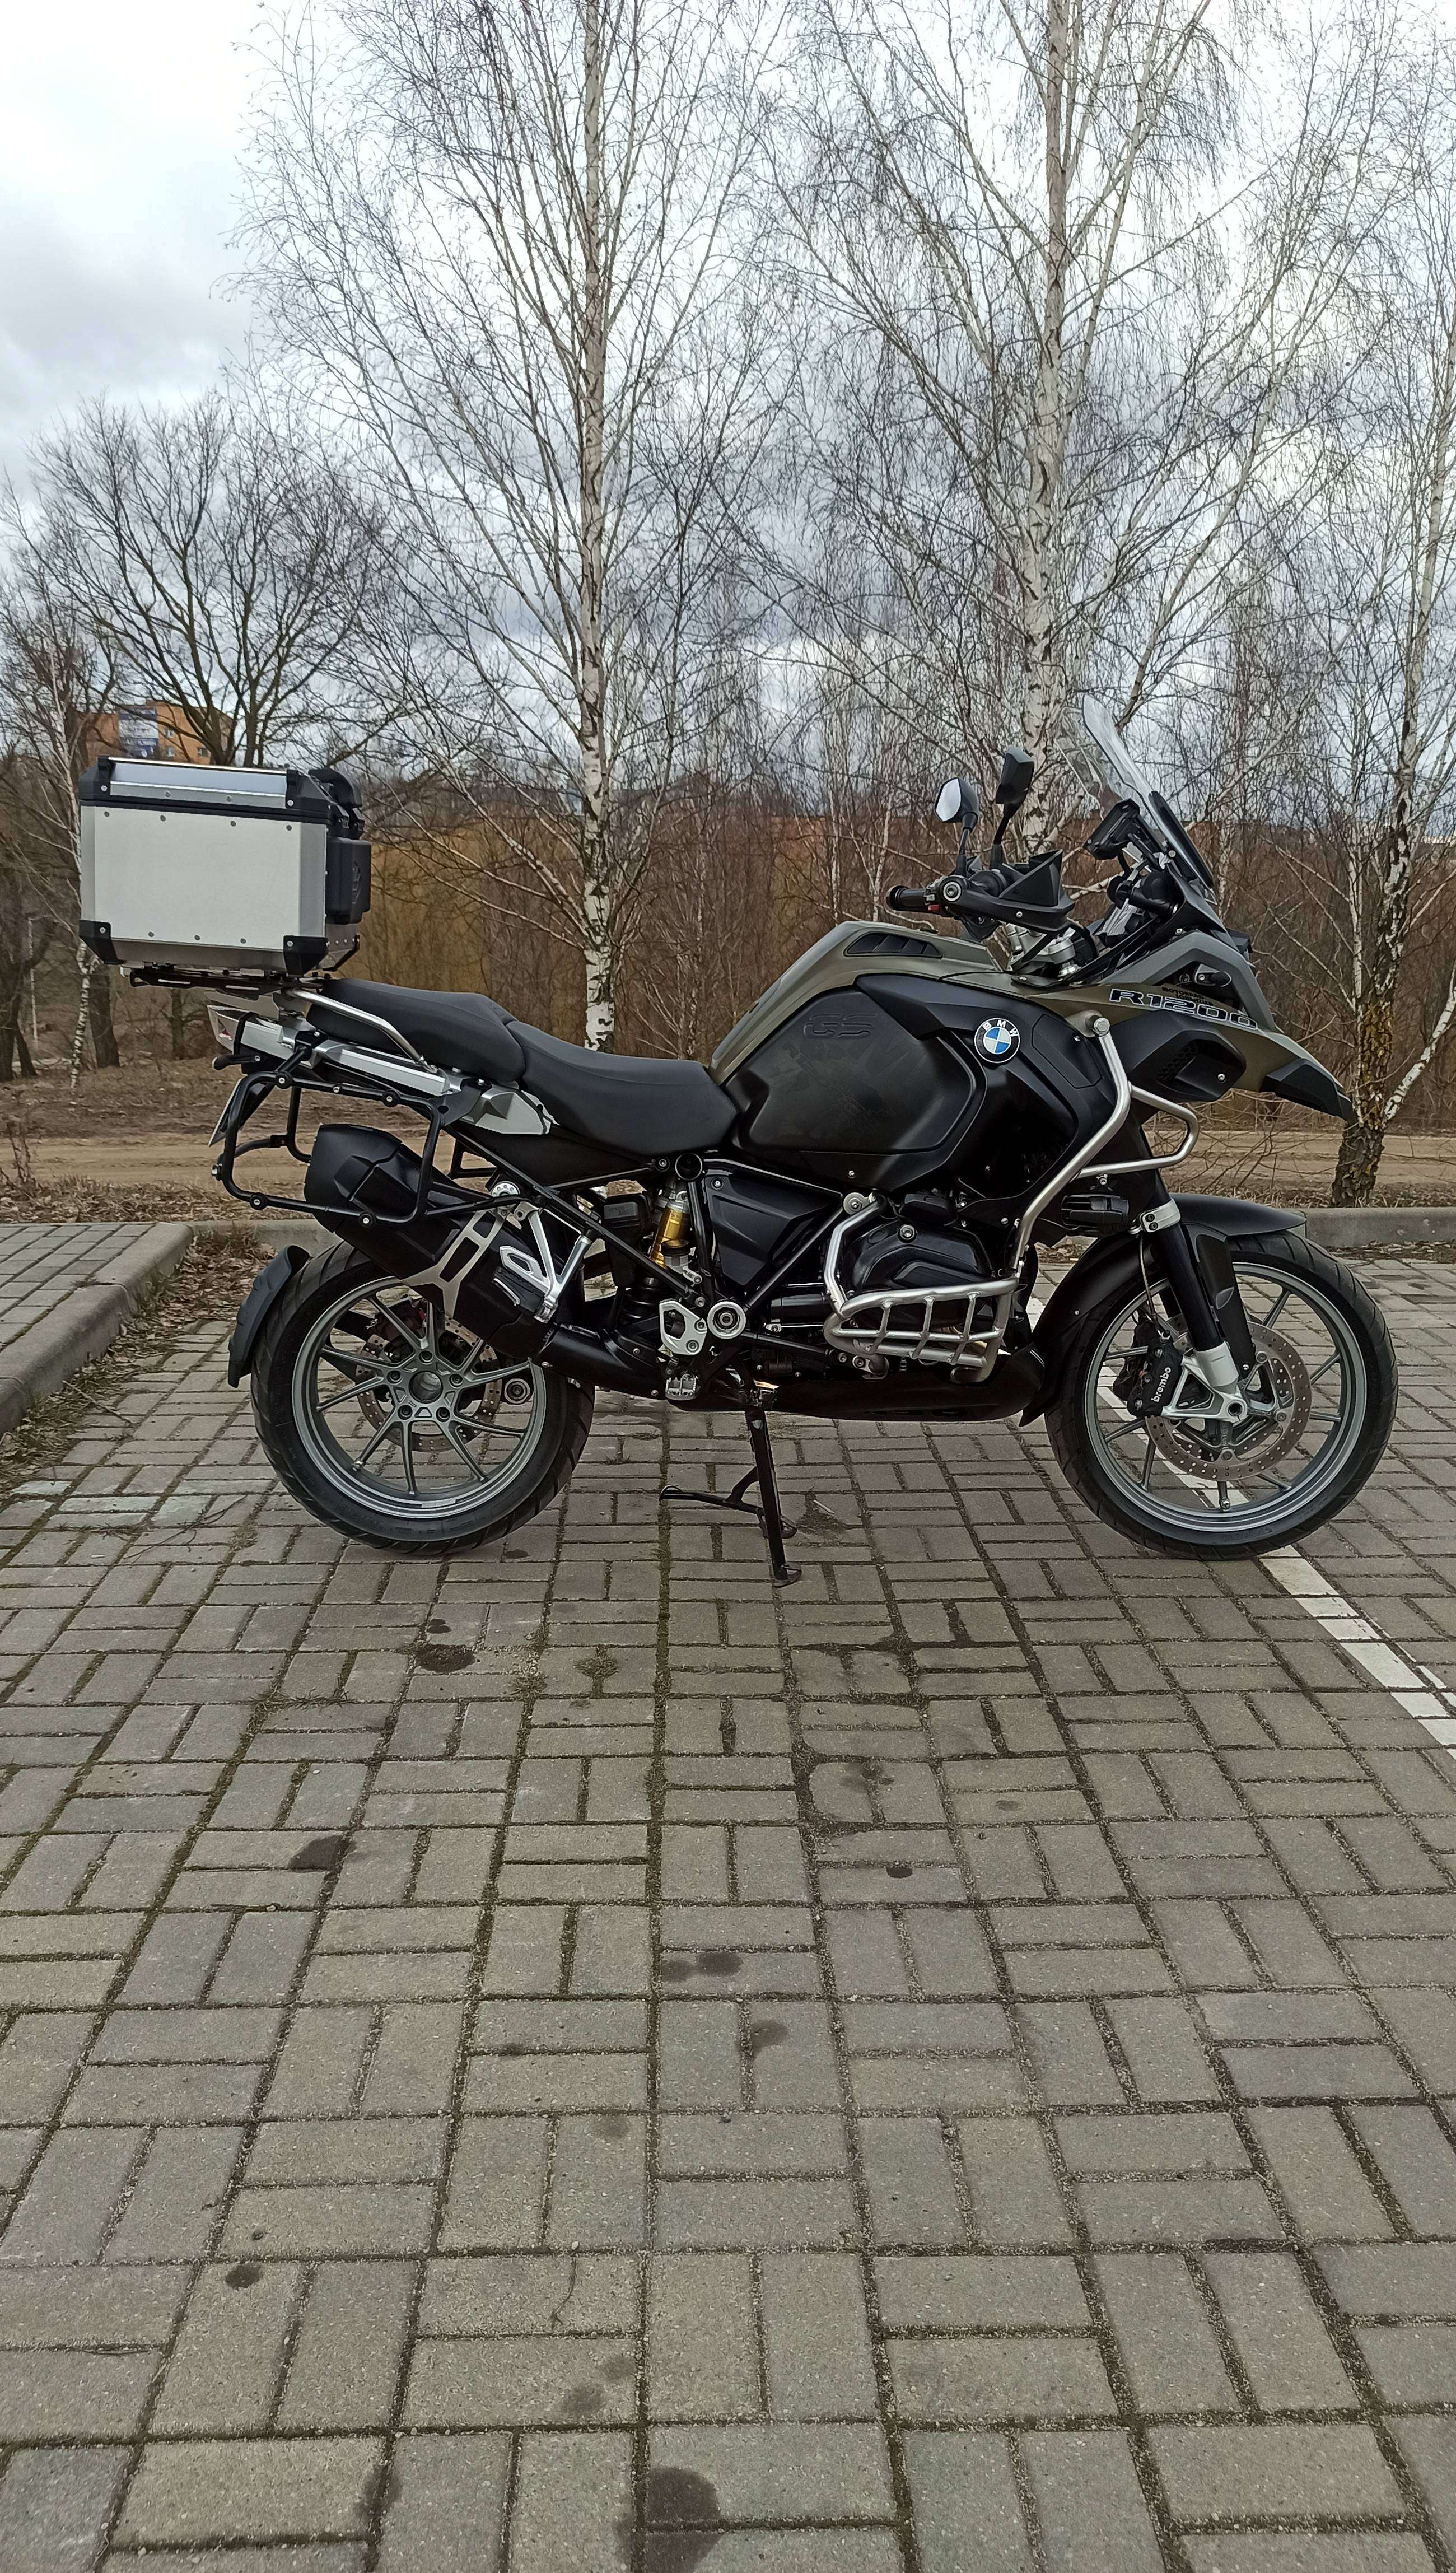 Купить мотоцикл BMW в Беларуси в кредит - цены, характеристики, фото. 